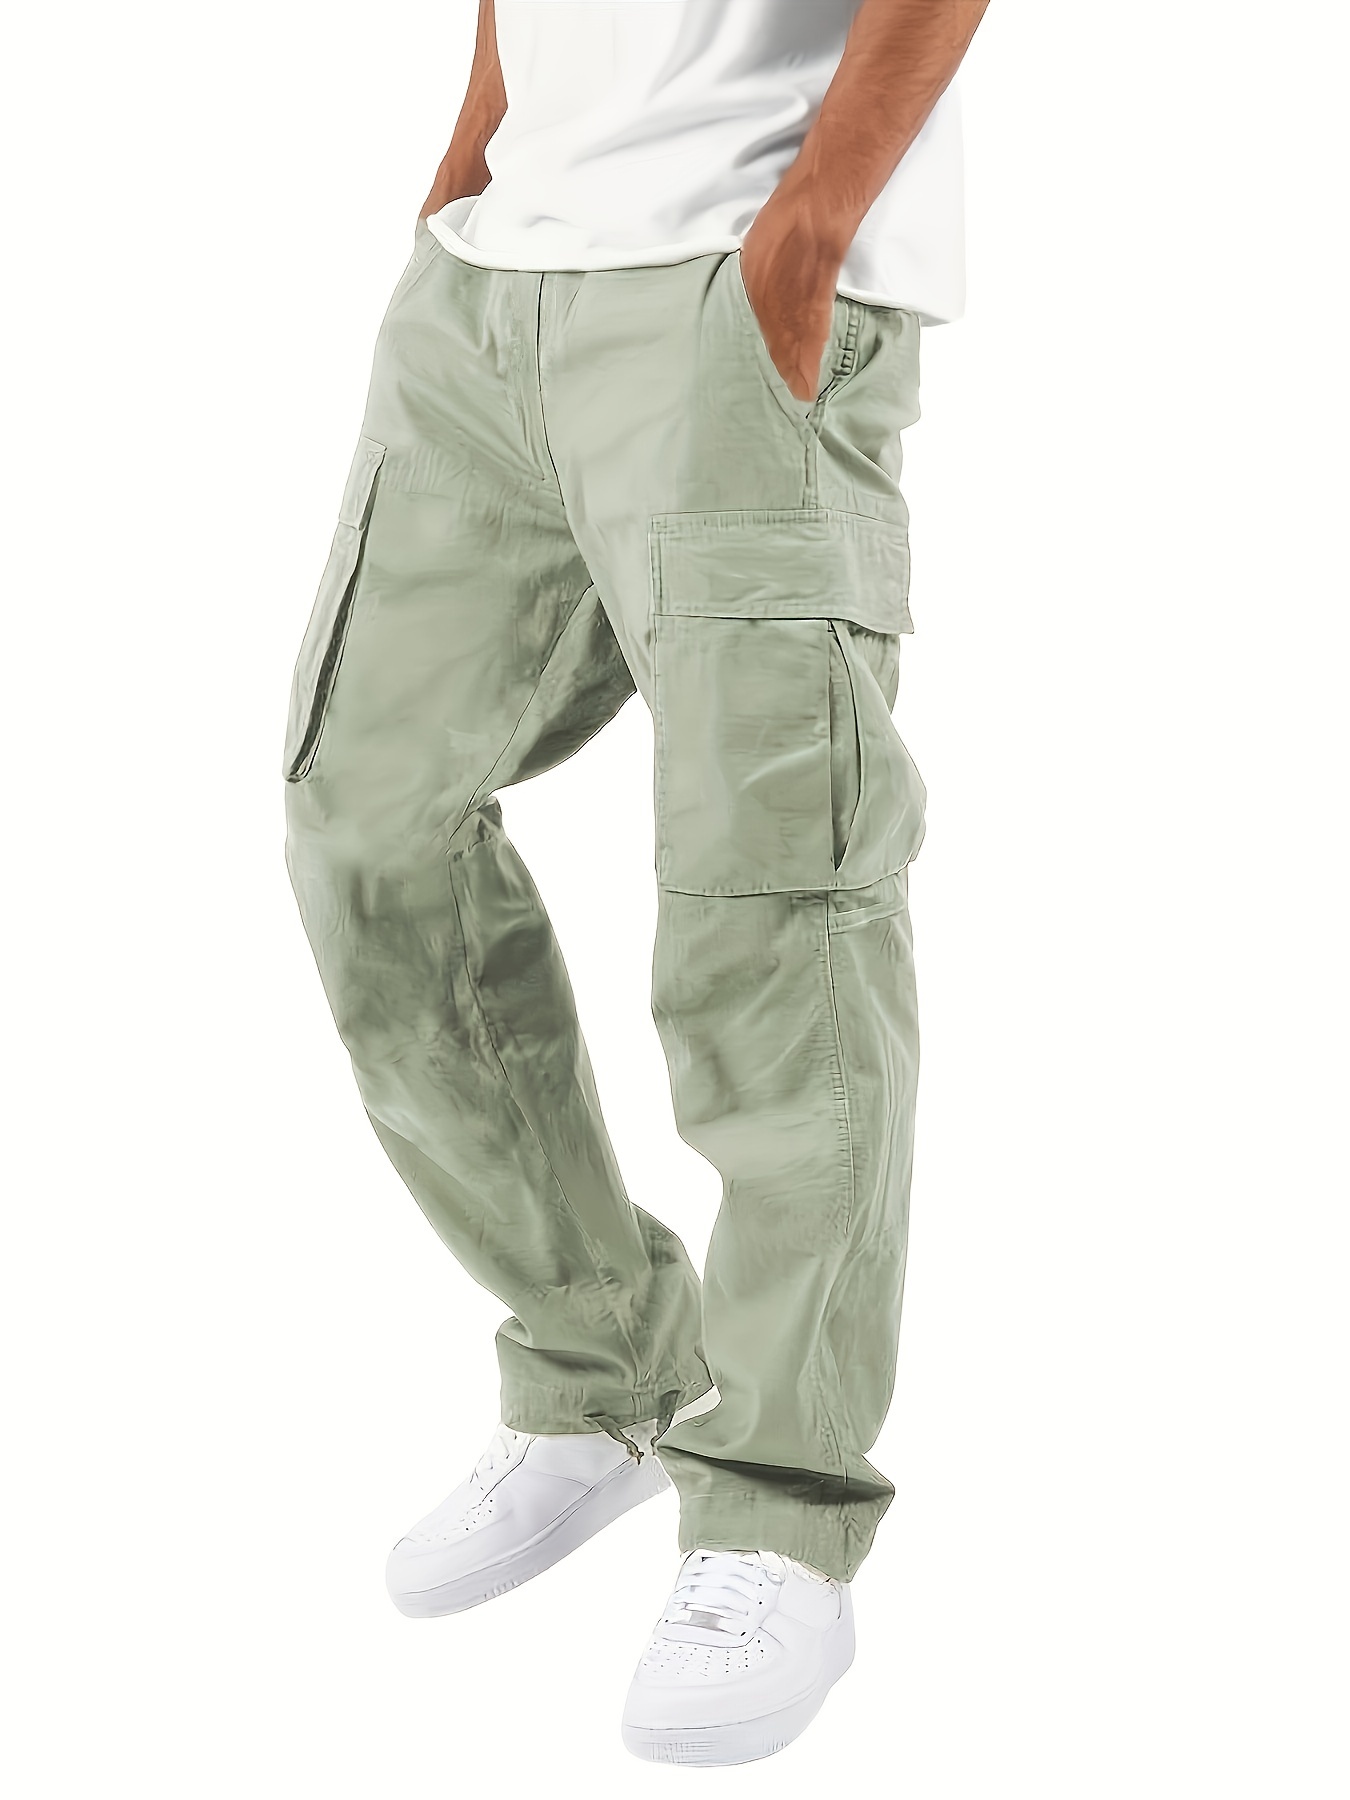 Low-waist Cargo Pants - Light khaki green - Ladies